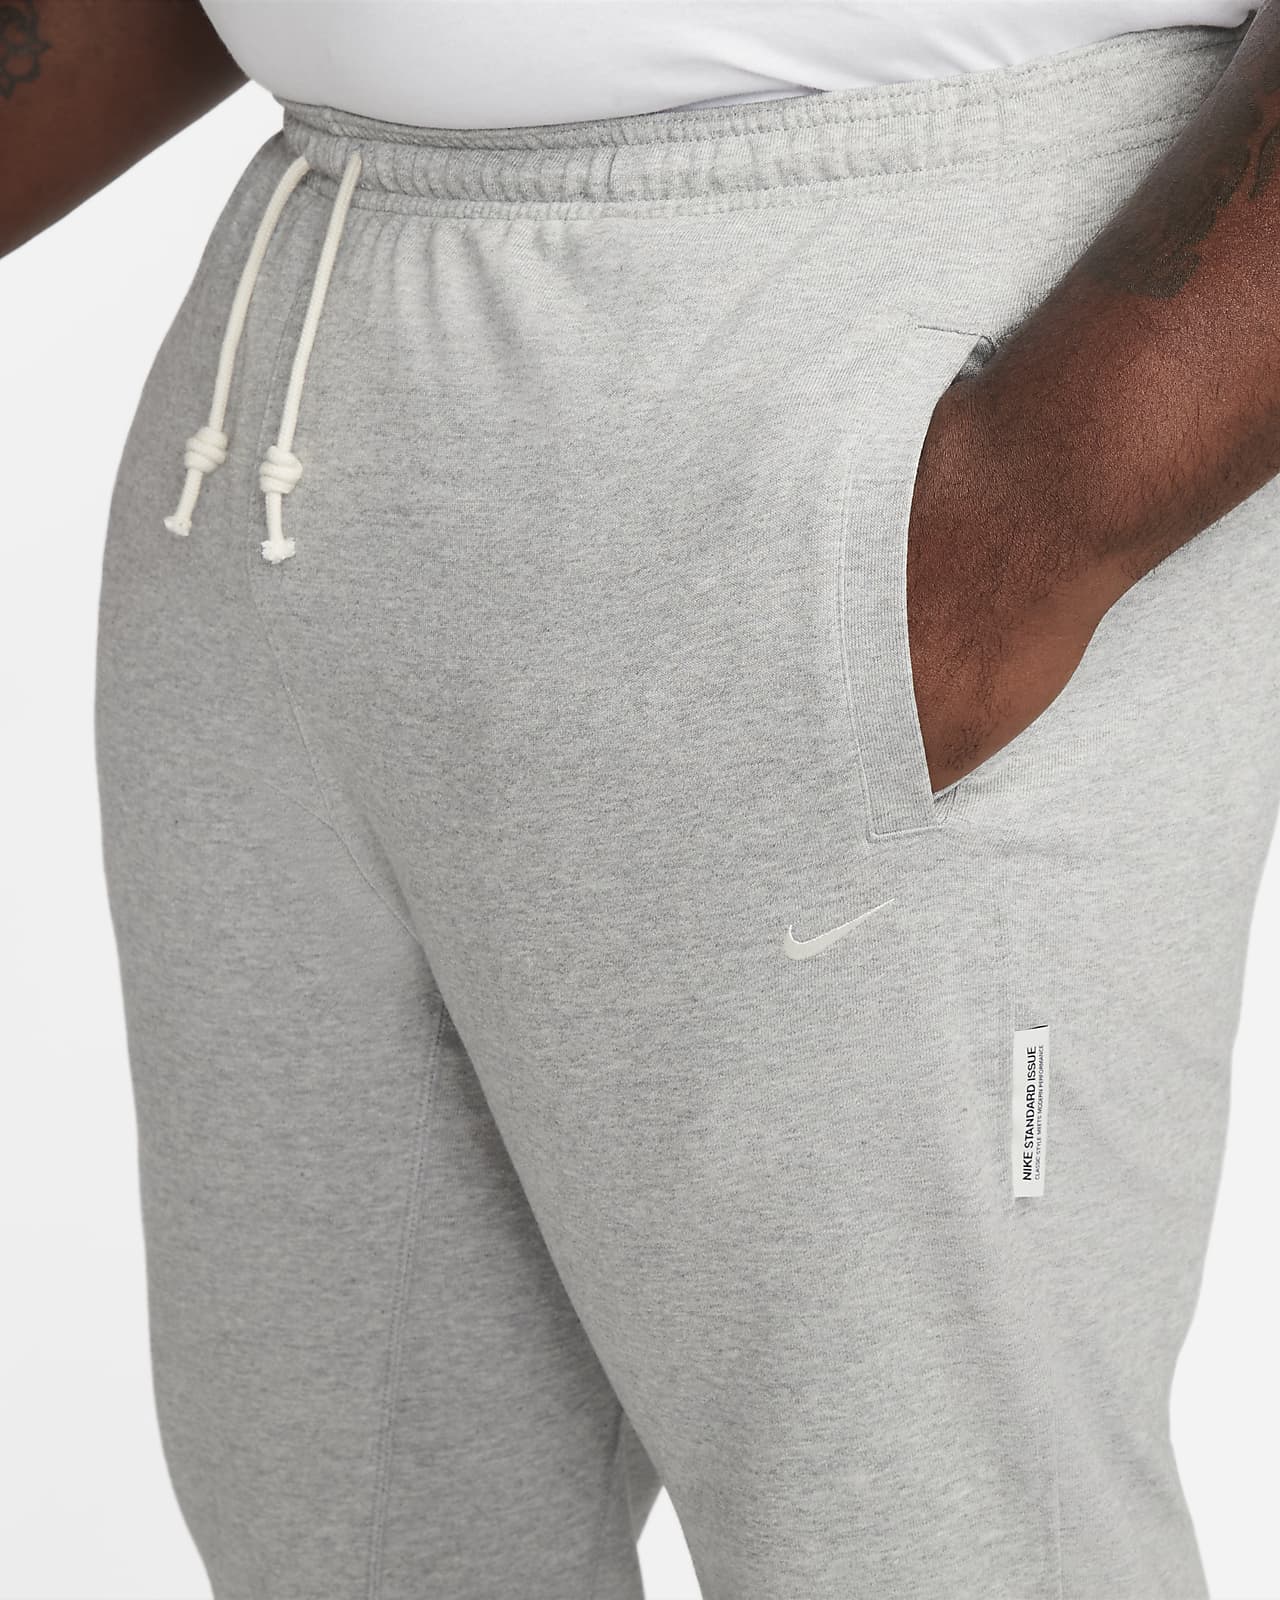 Nike Standard Issue Men's Dri-FIT Basketball Pants.